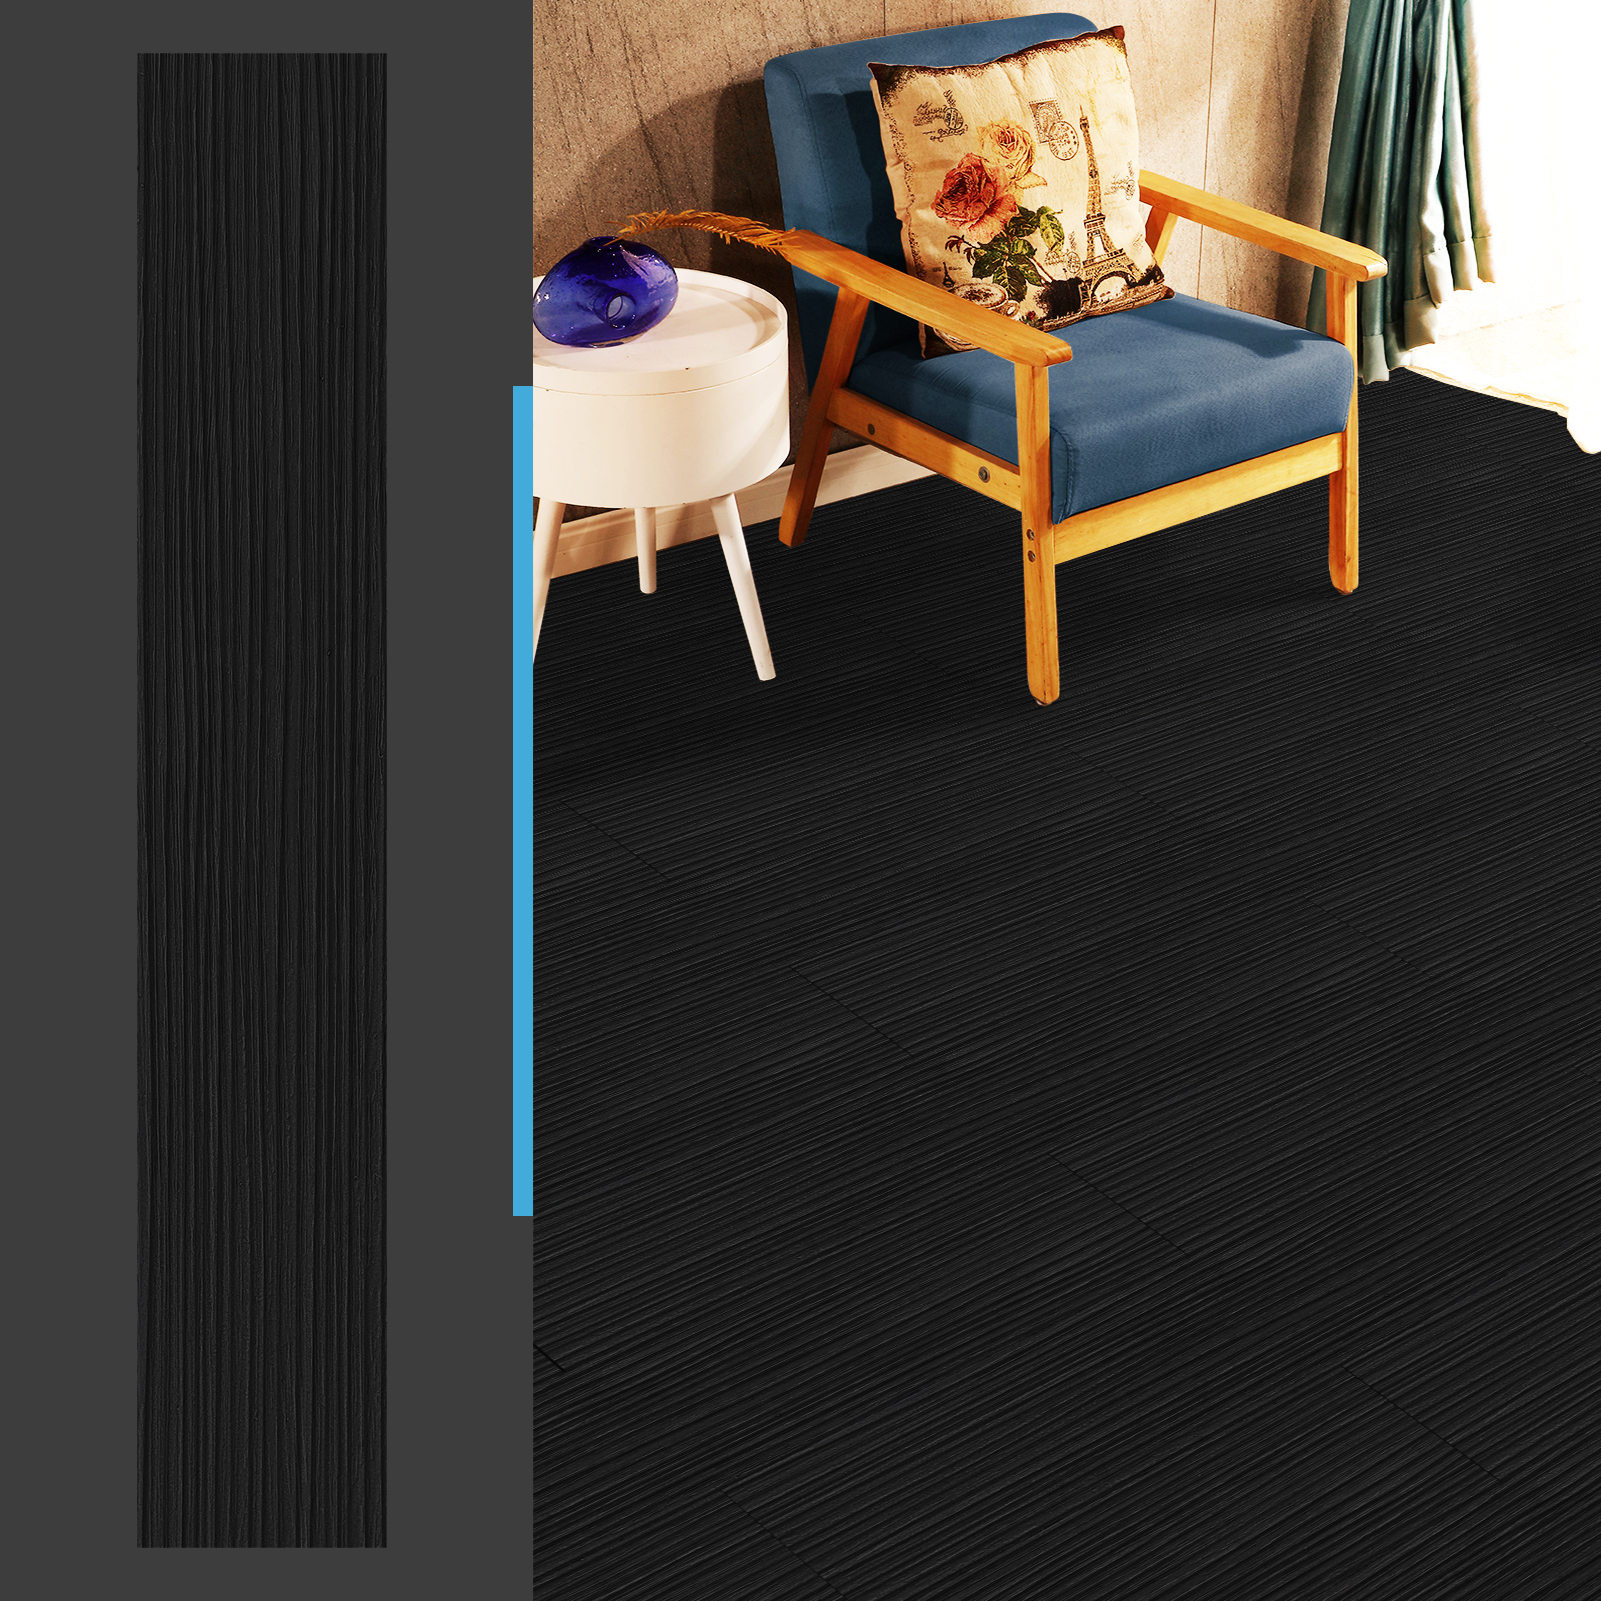 Art3d Brown Stone 6x36 Water Resistant Peel and Stick Vinyl Floor Tile, Self-Adhesive Flooring(54 sq.ft./case)